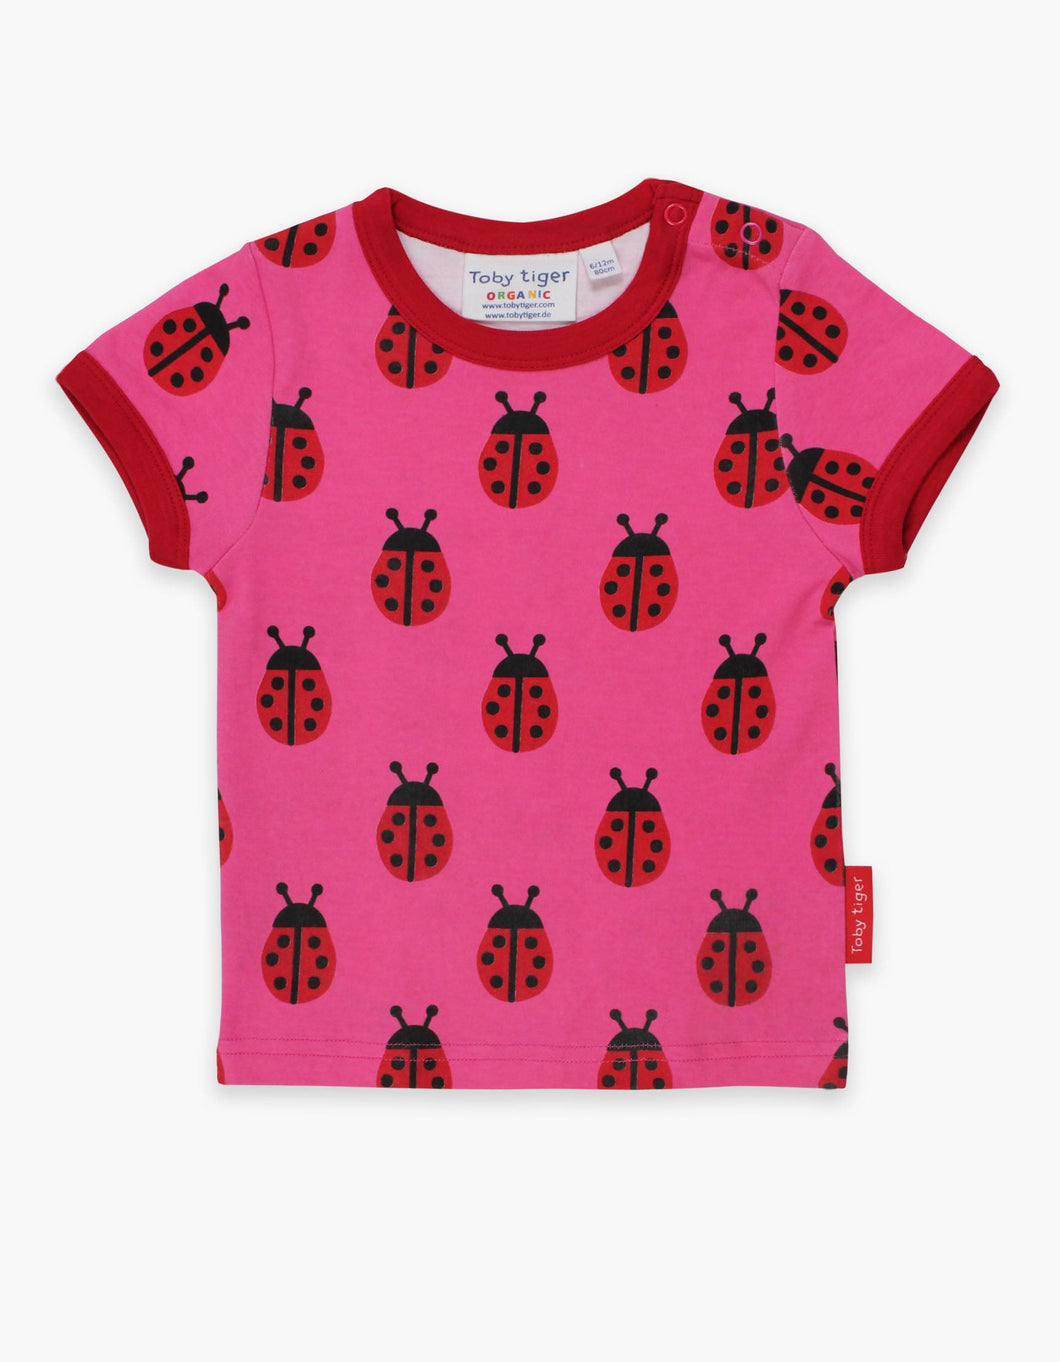 T-shirt, ladybug print, organic cotton